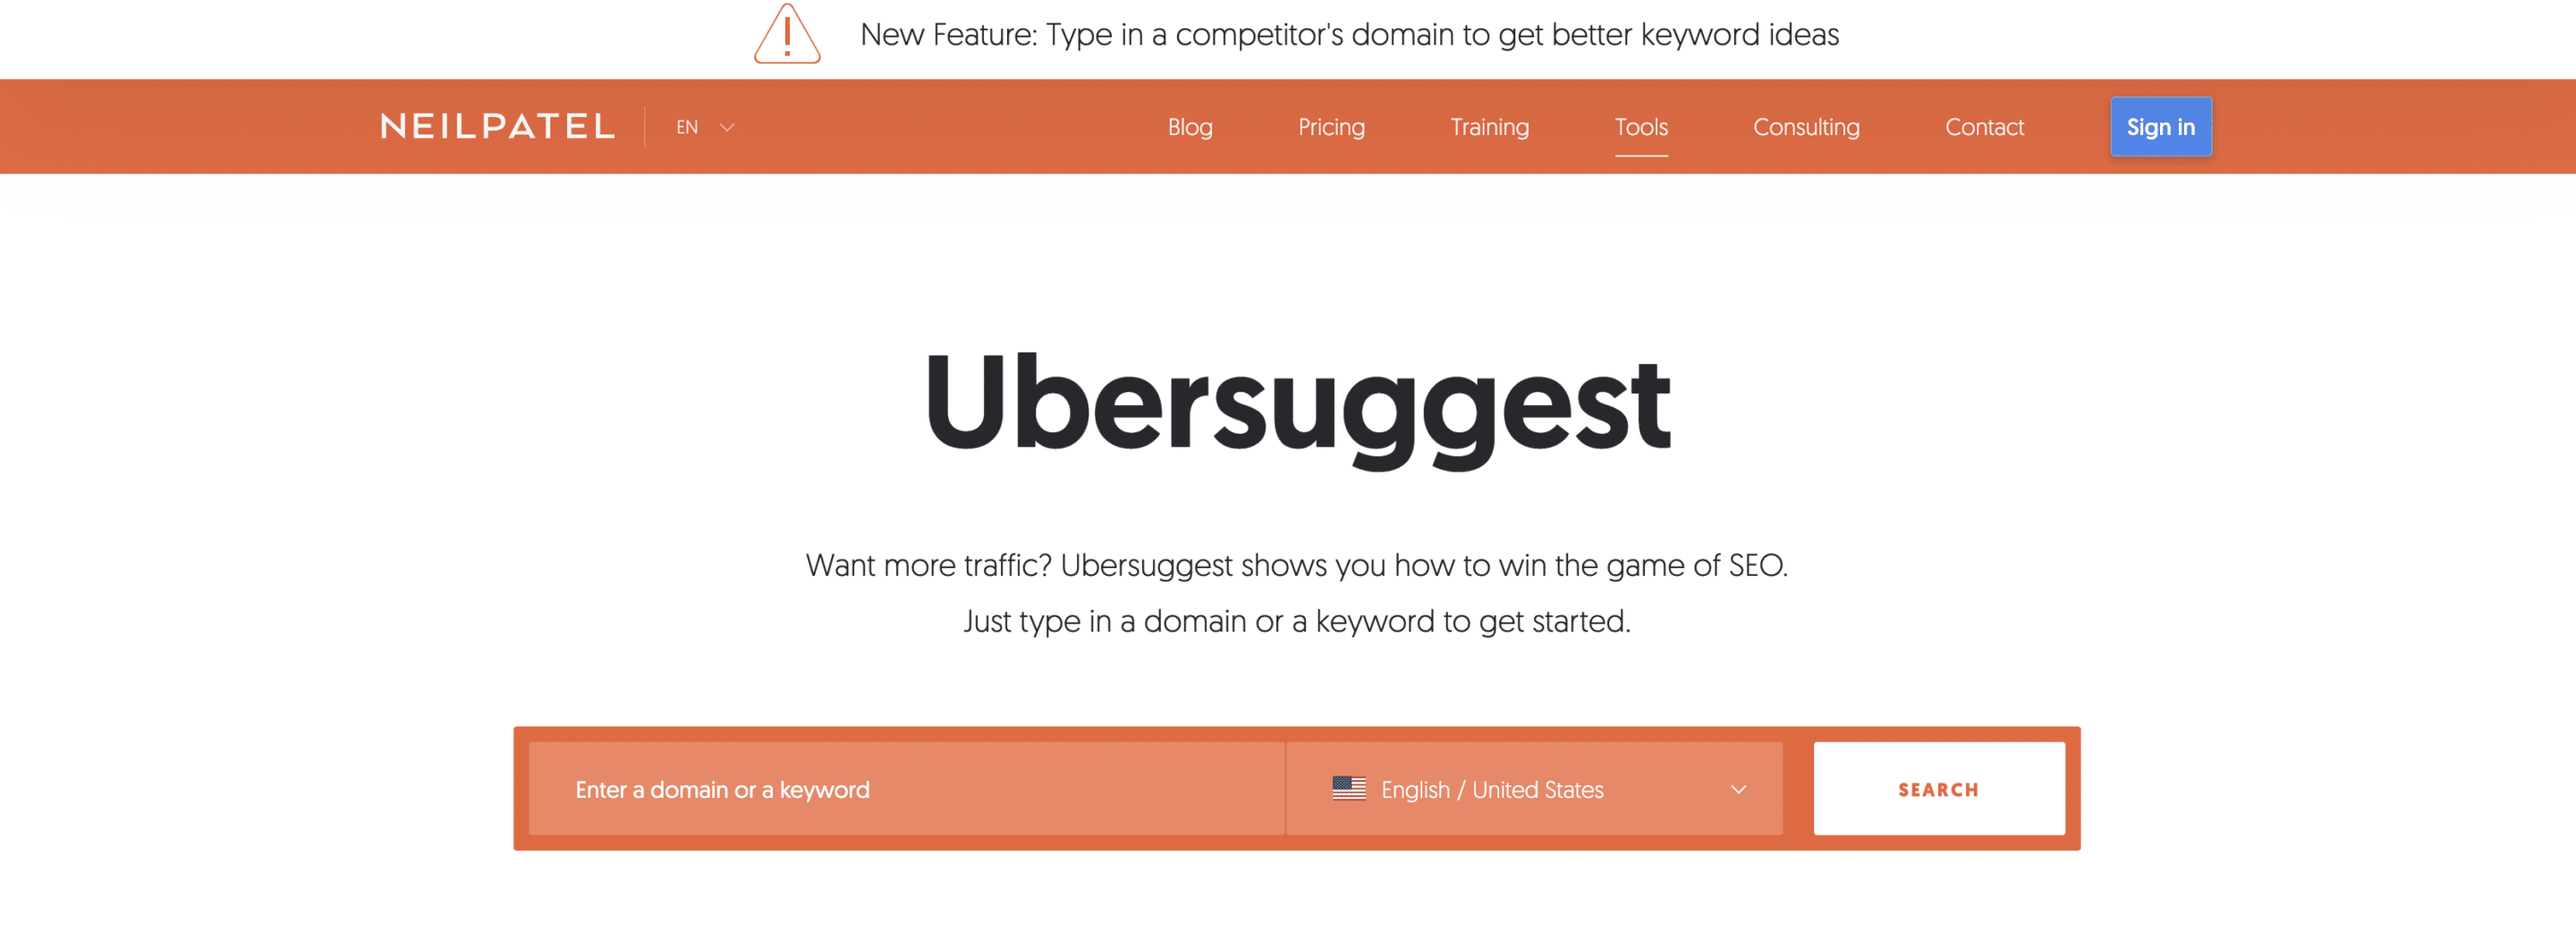 uber suggest home screen